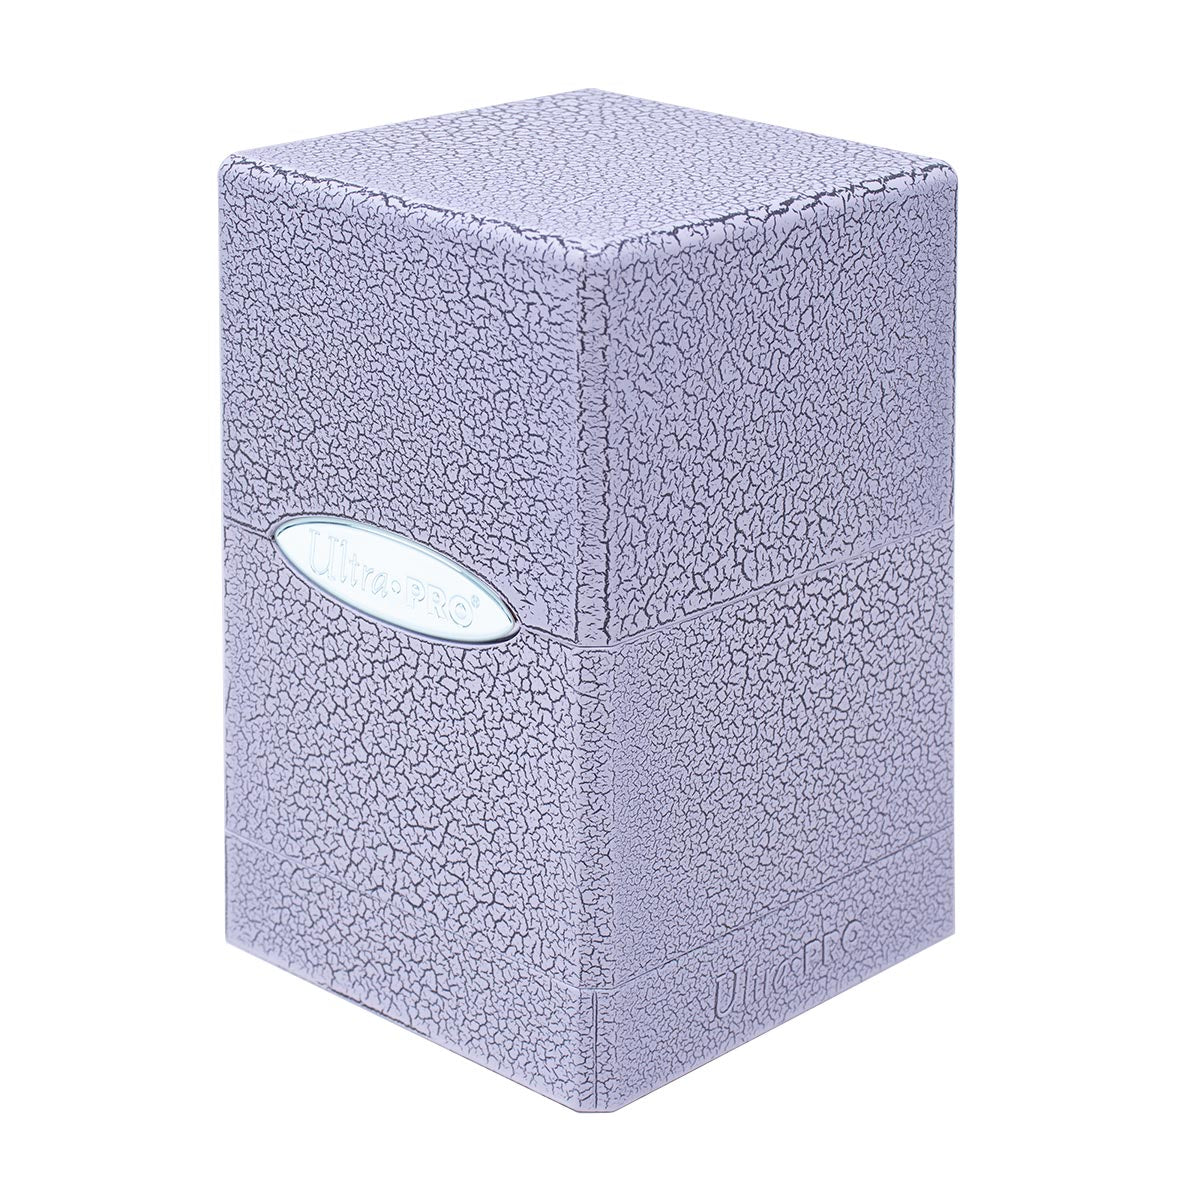 Satin Tower Deck Box Ivory Crackle